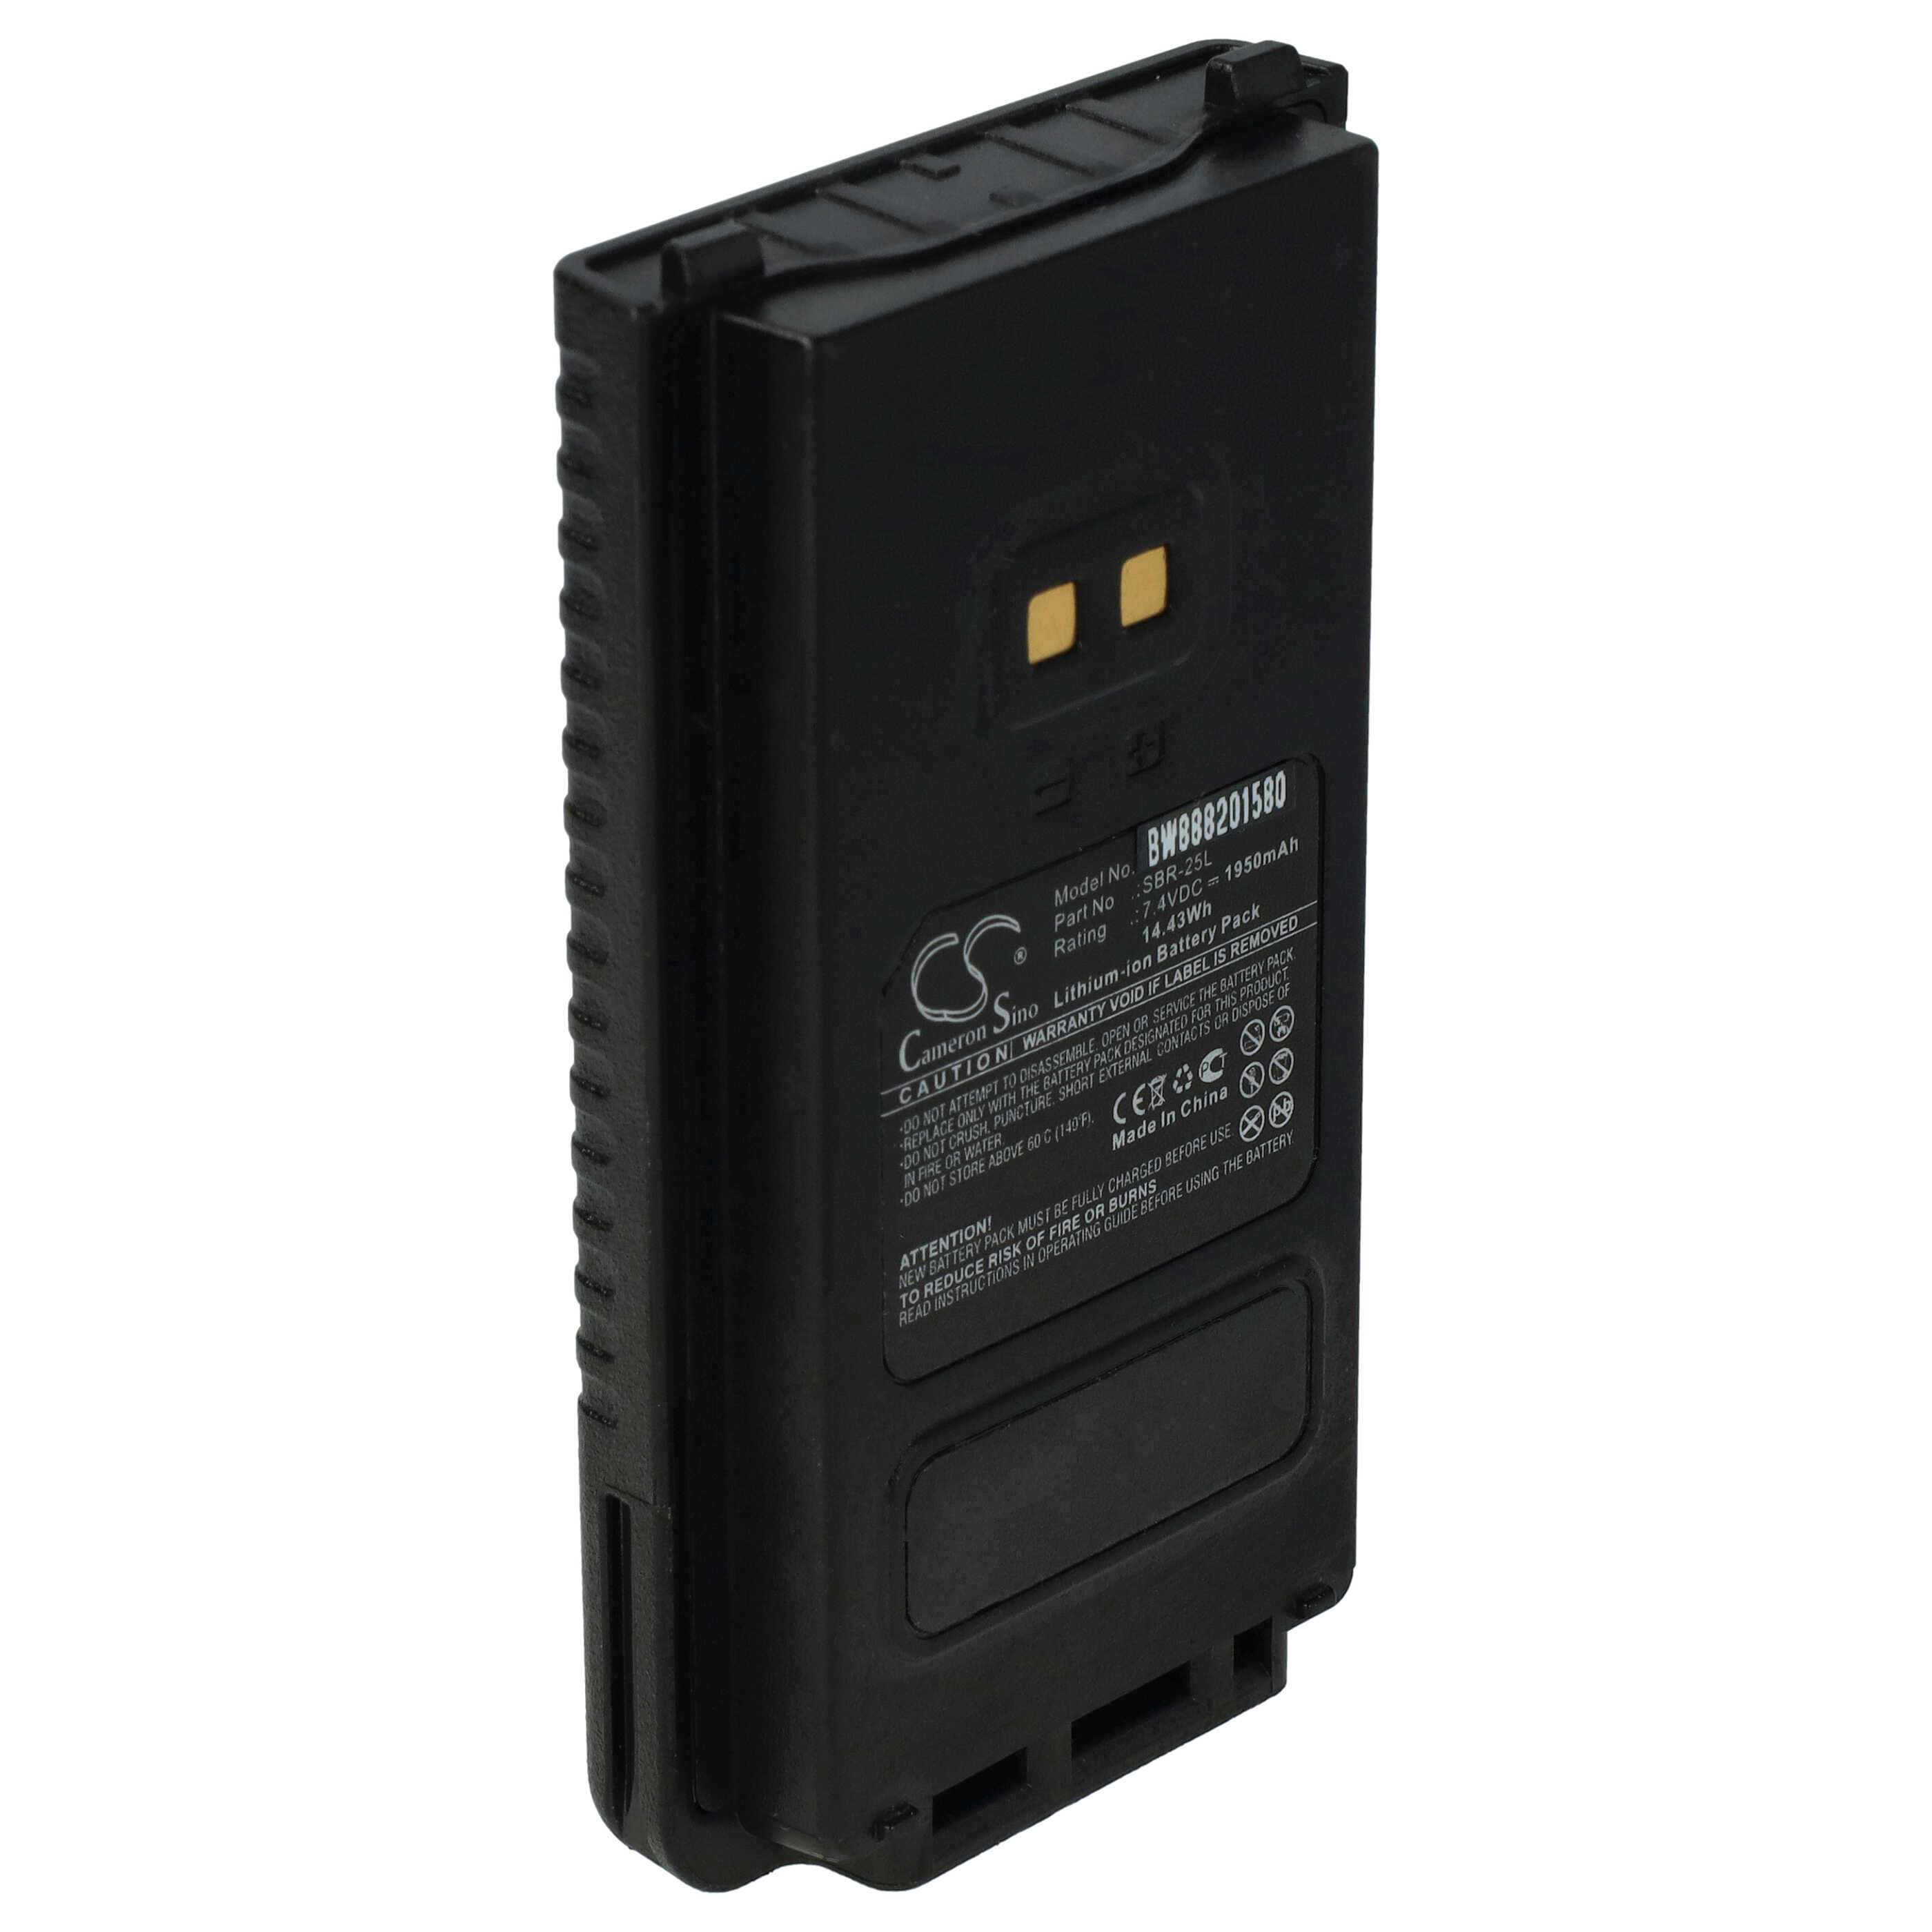 Batterie remplace Yaesu SBR-25L pour radio talkie-walkie - 1950mAh 7,4V Li-ion